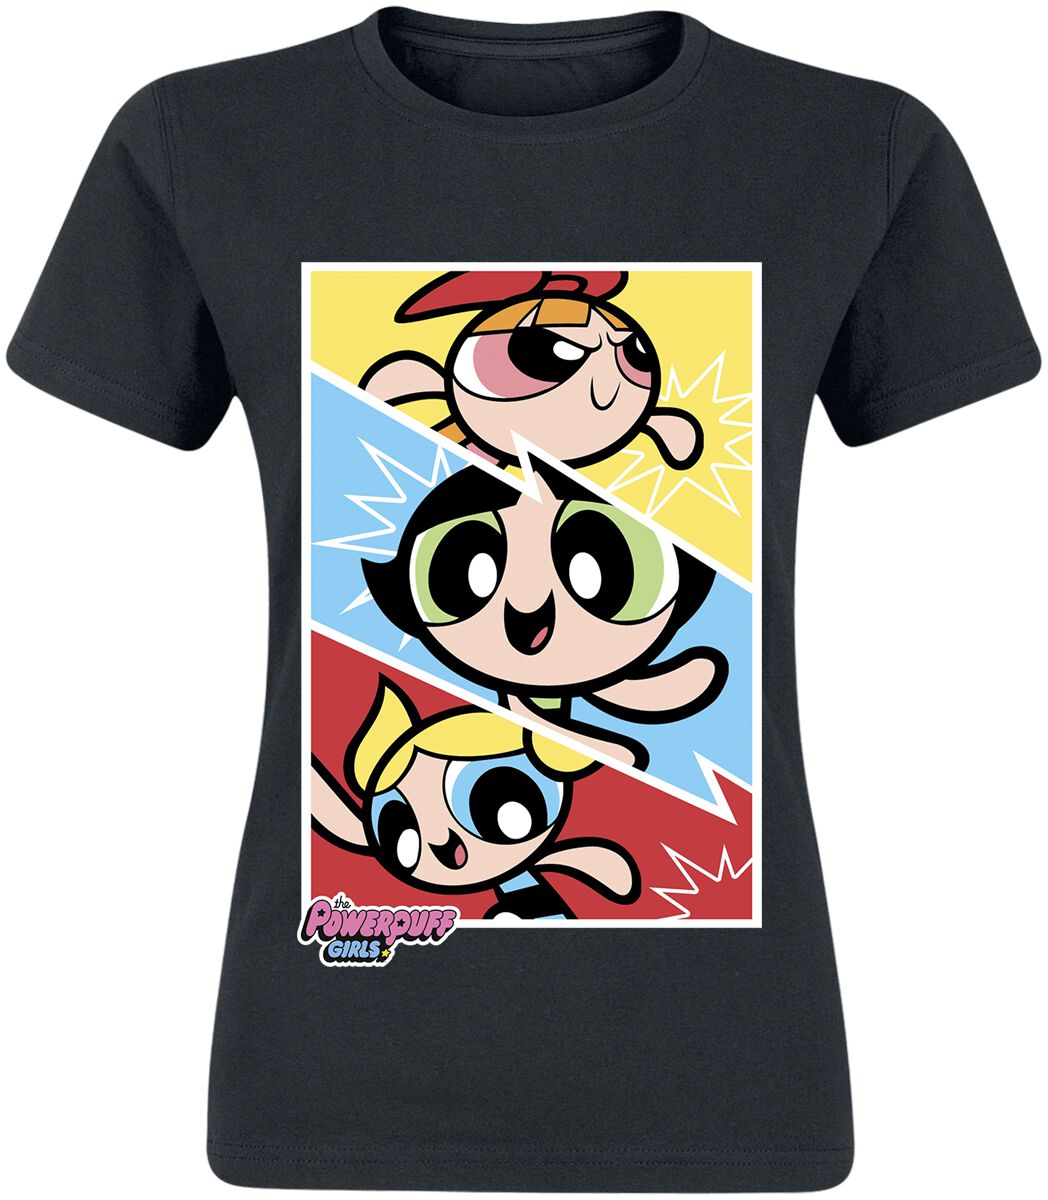 The Powerpuff Girls Comic Strip T-Shirt black